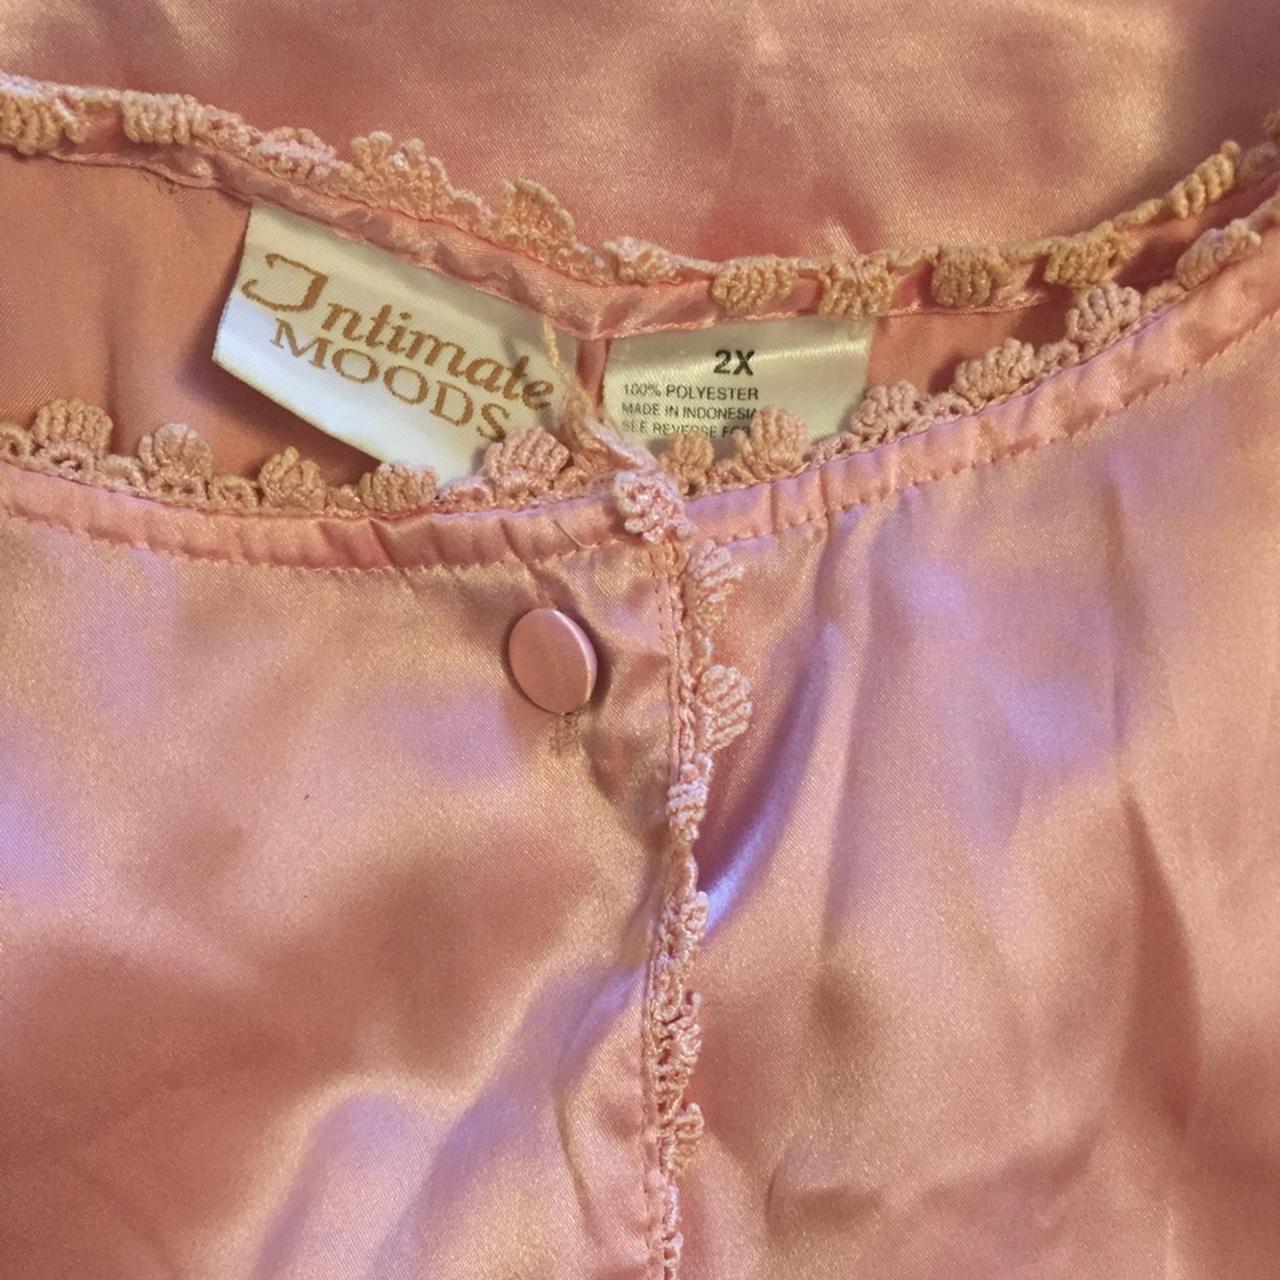 Product Image 3 - Intimate moods pink pajama set
lovely